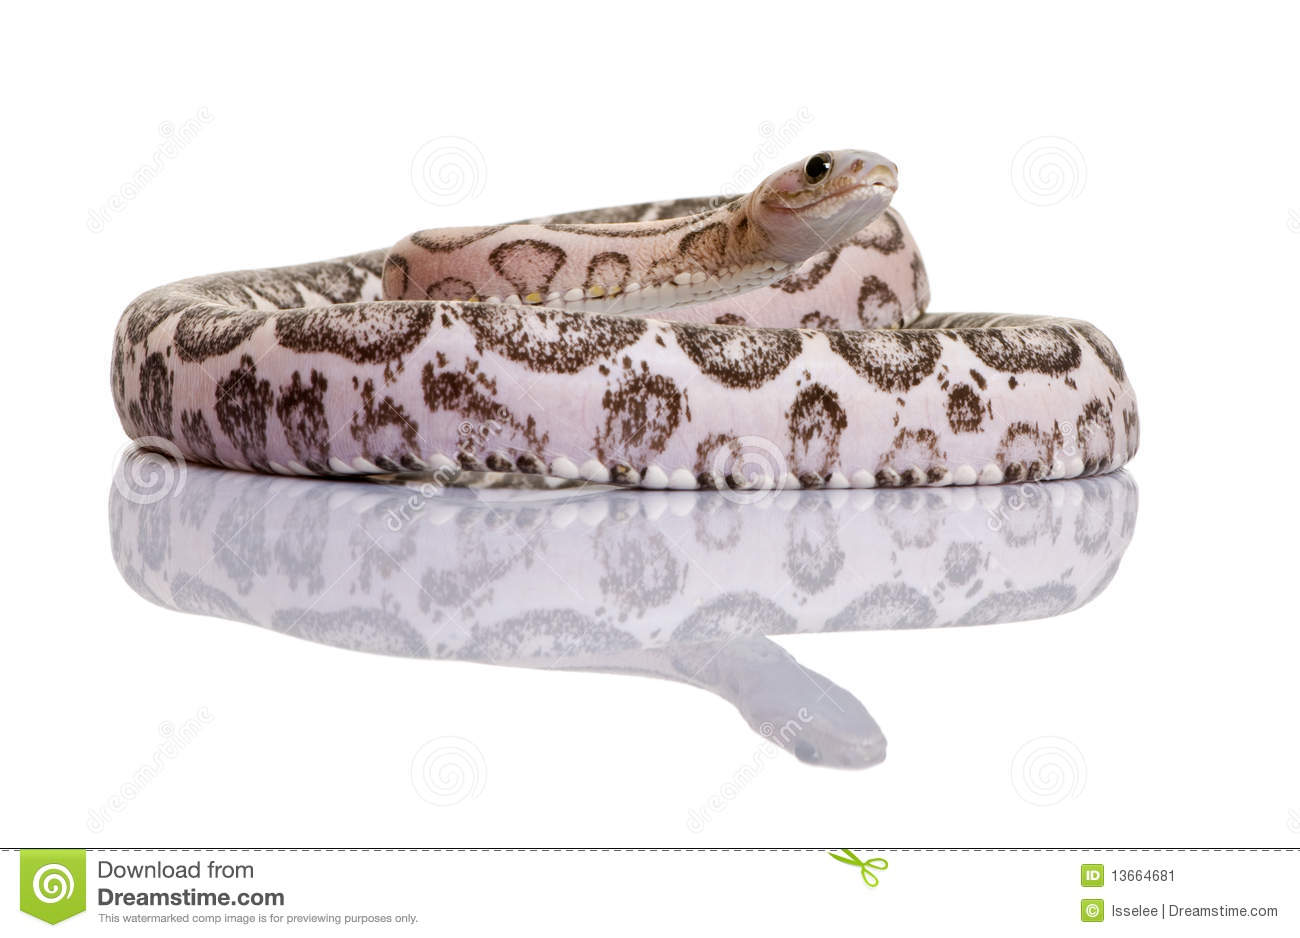 Scaleless Corn Snake Or Red Rat Snake Stock Image   Image  13664681